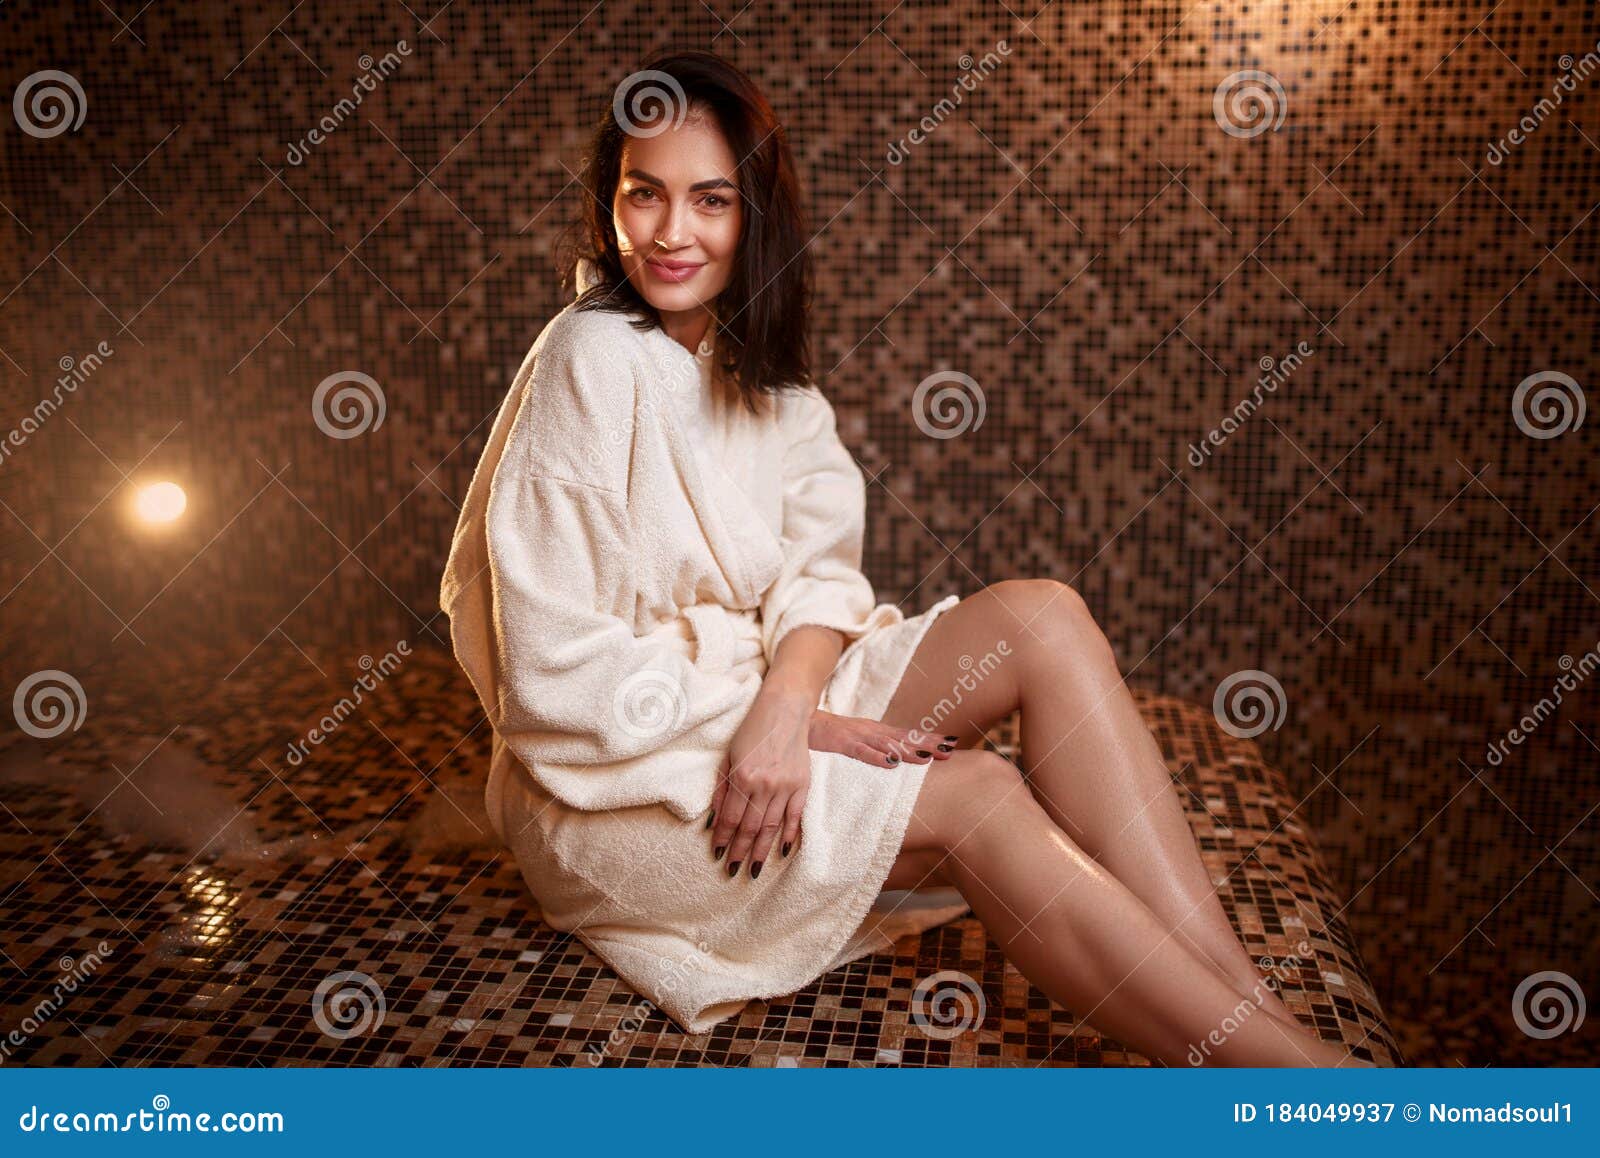 woman sitting on a hot stone in hamam, sauna